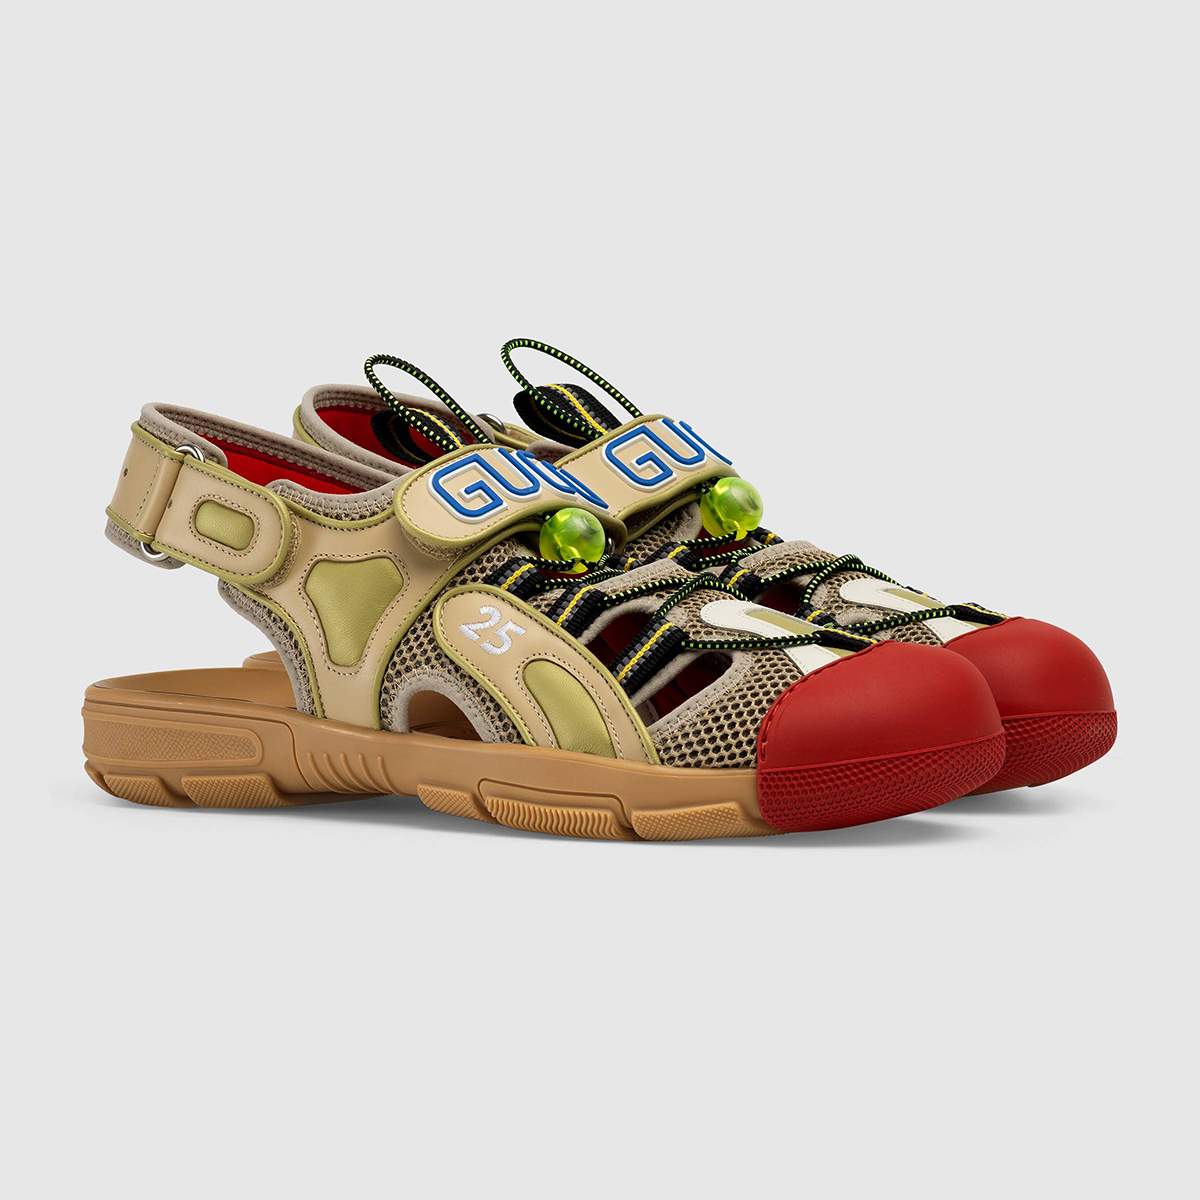 gucci clown shoes